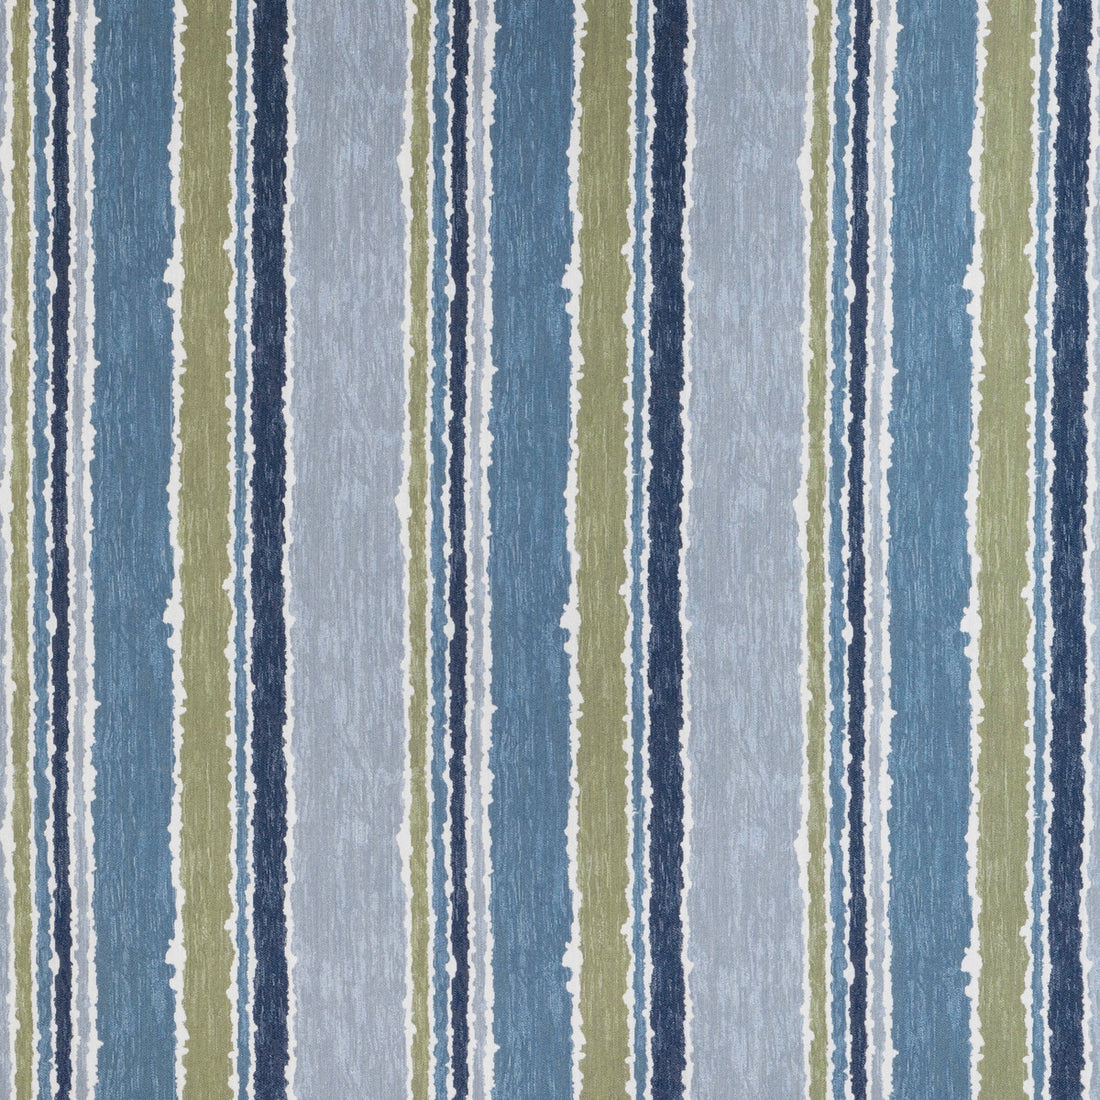 Kravet Design fabric in 36796-530 color - pattern 36796.530.0 - by Kravet Design in the Sea Island Indoor/Outdoor collection